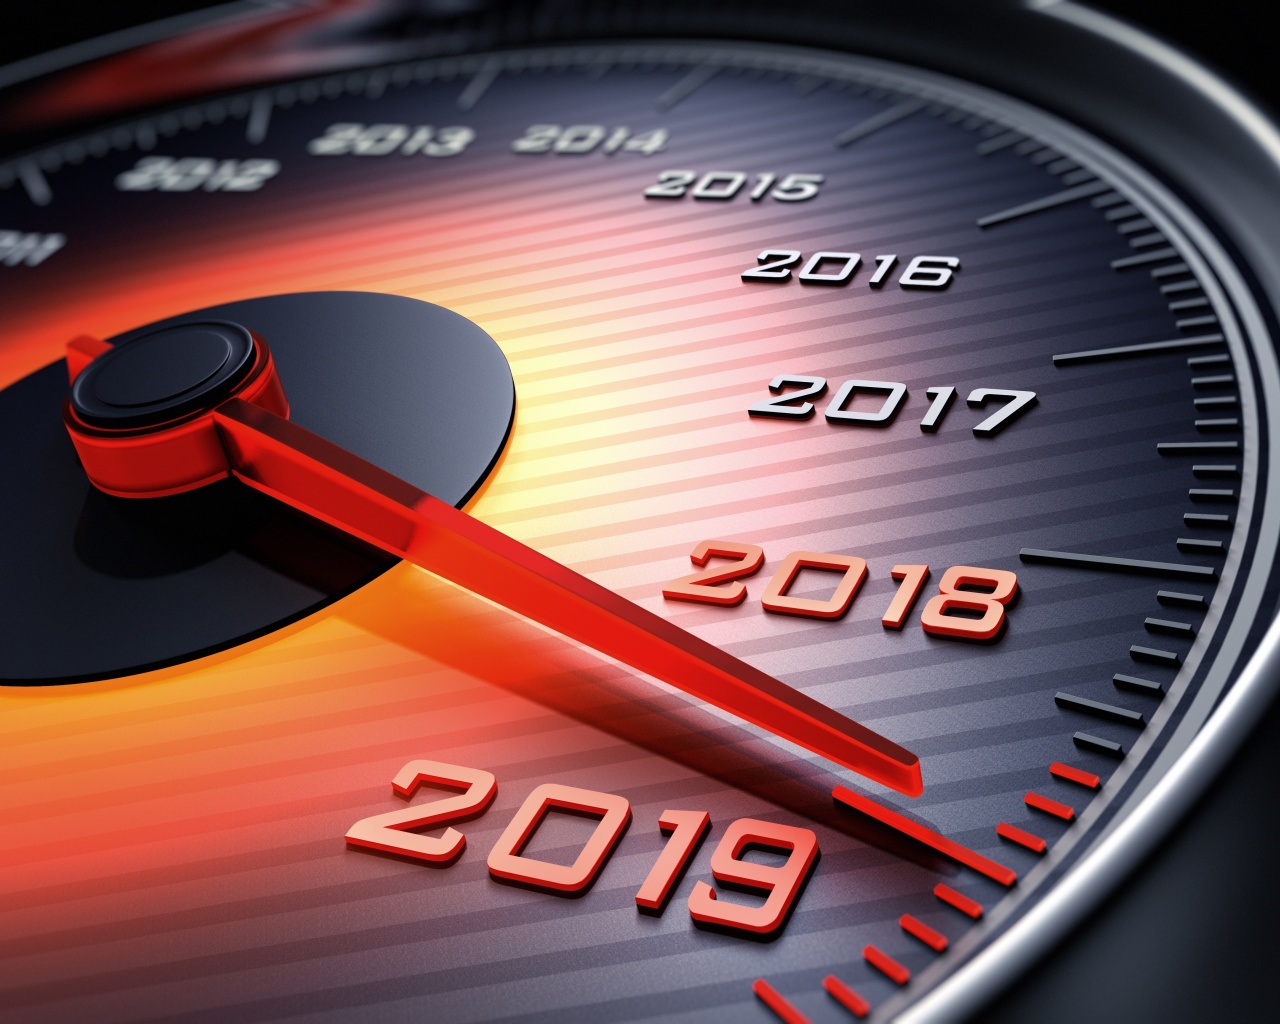 Das 2019 New Year Car Speedometer Gauge Wallpaper 1280x1024